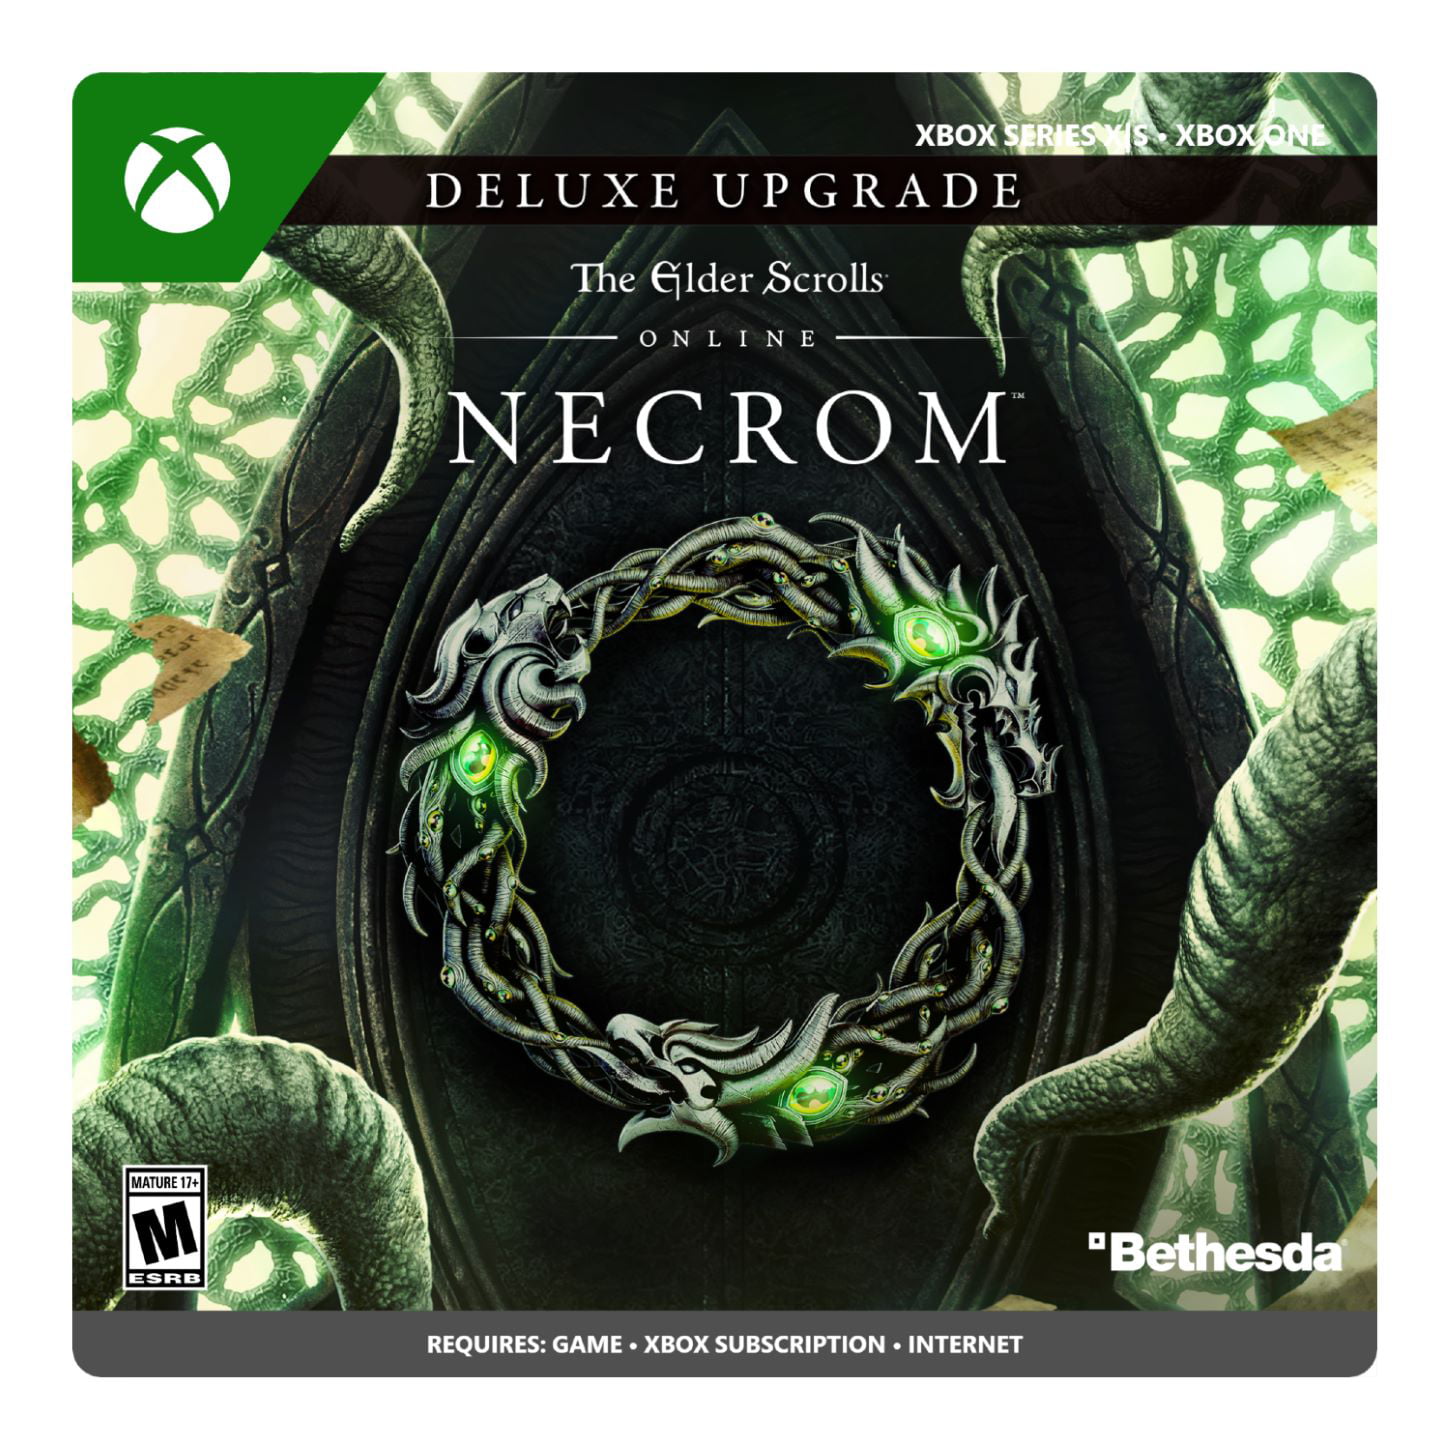 The Elder Scrolls Online: Necrom Review – Arcanist Peninsula